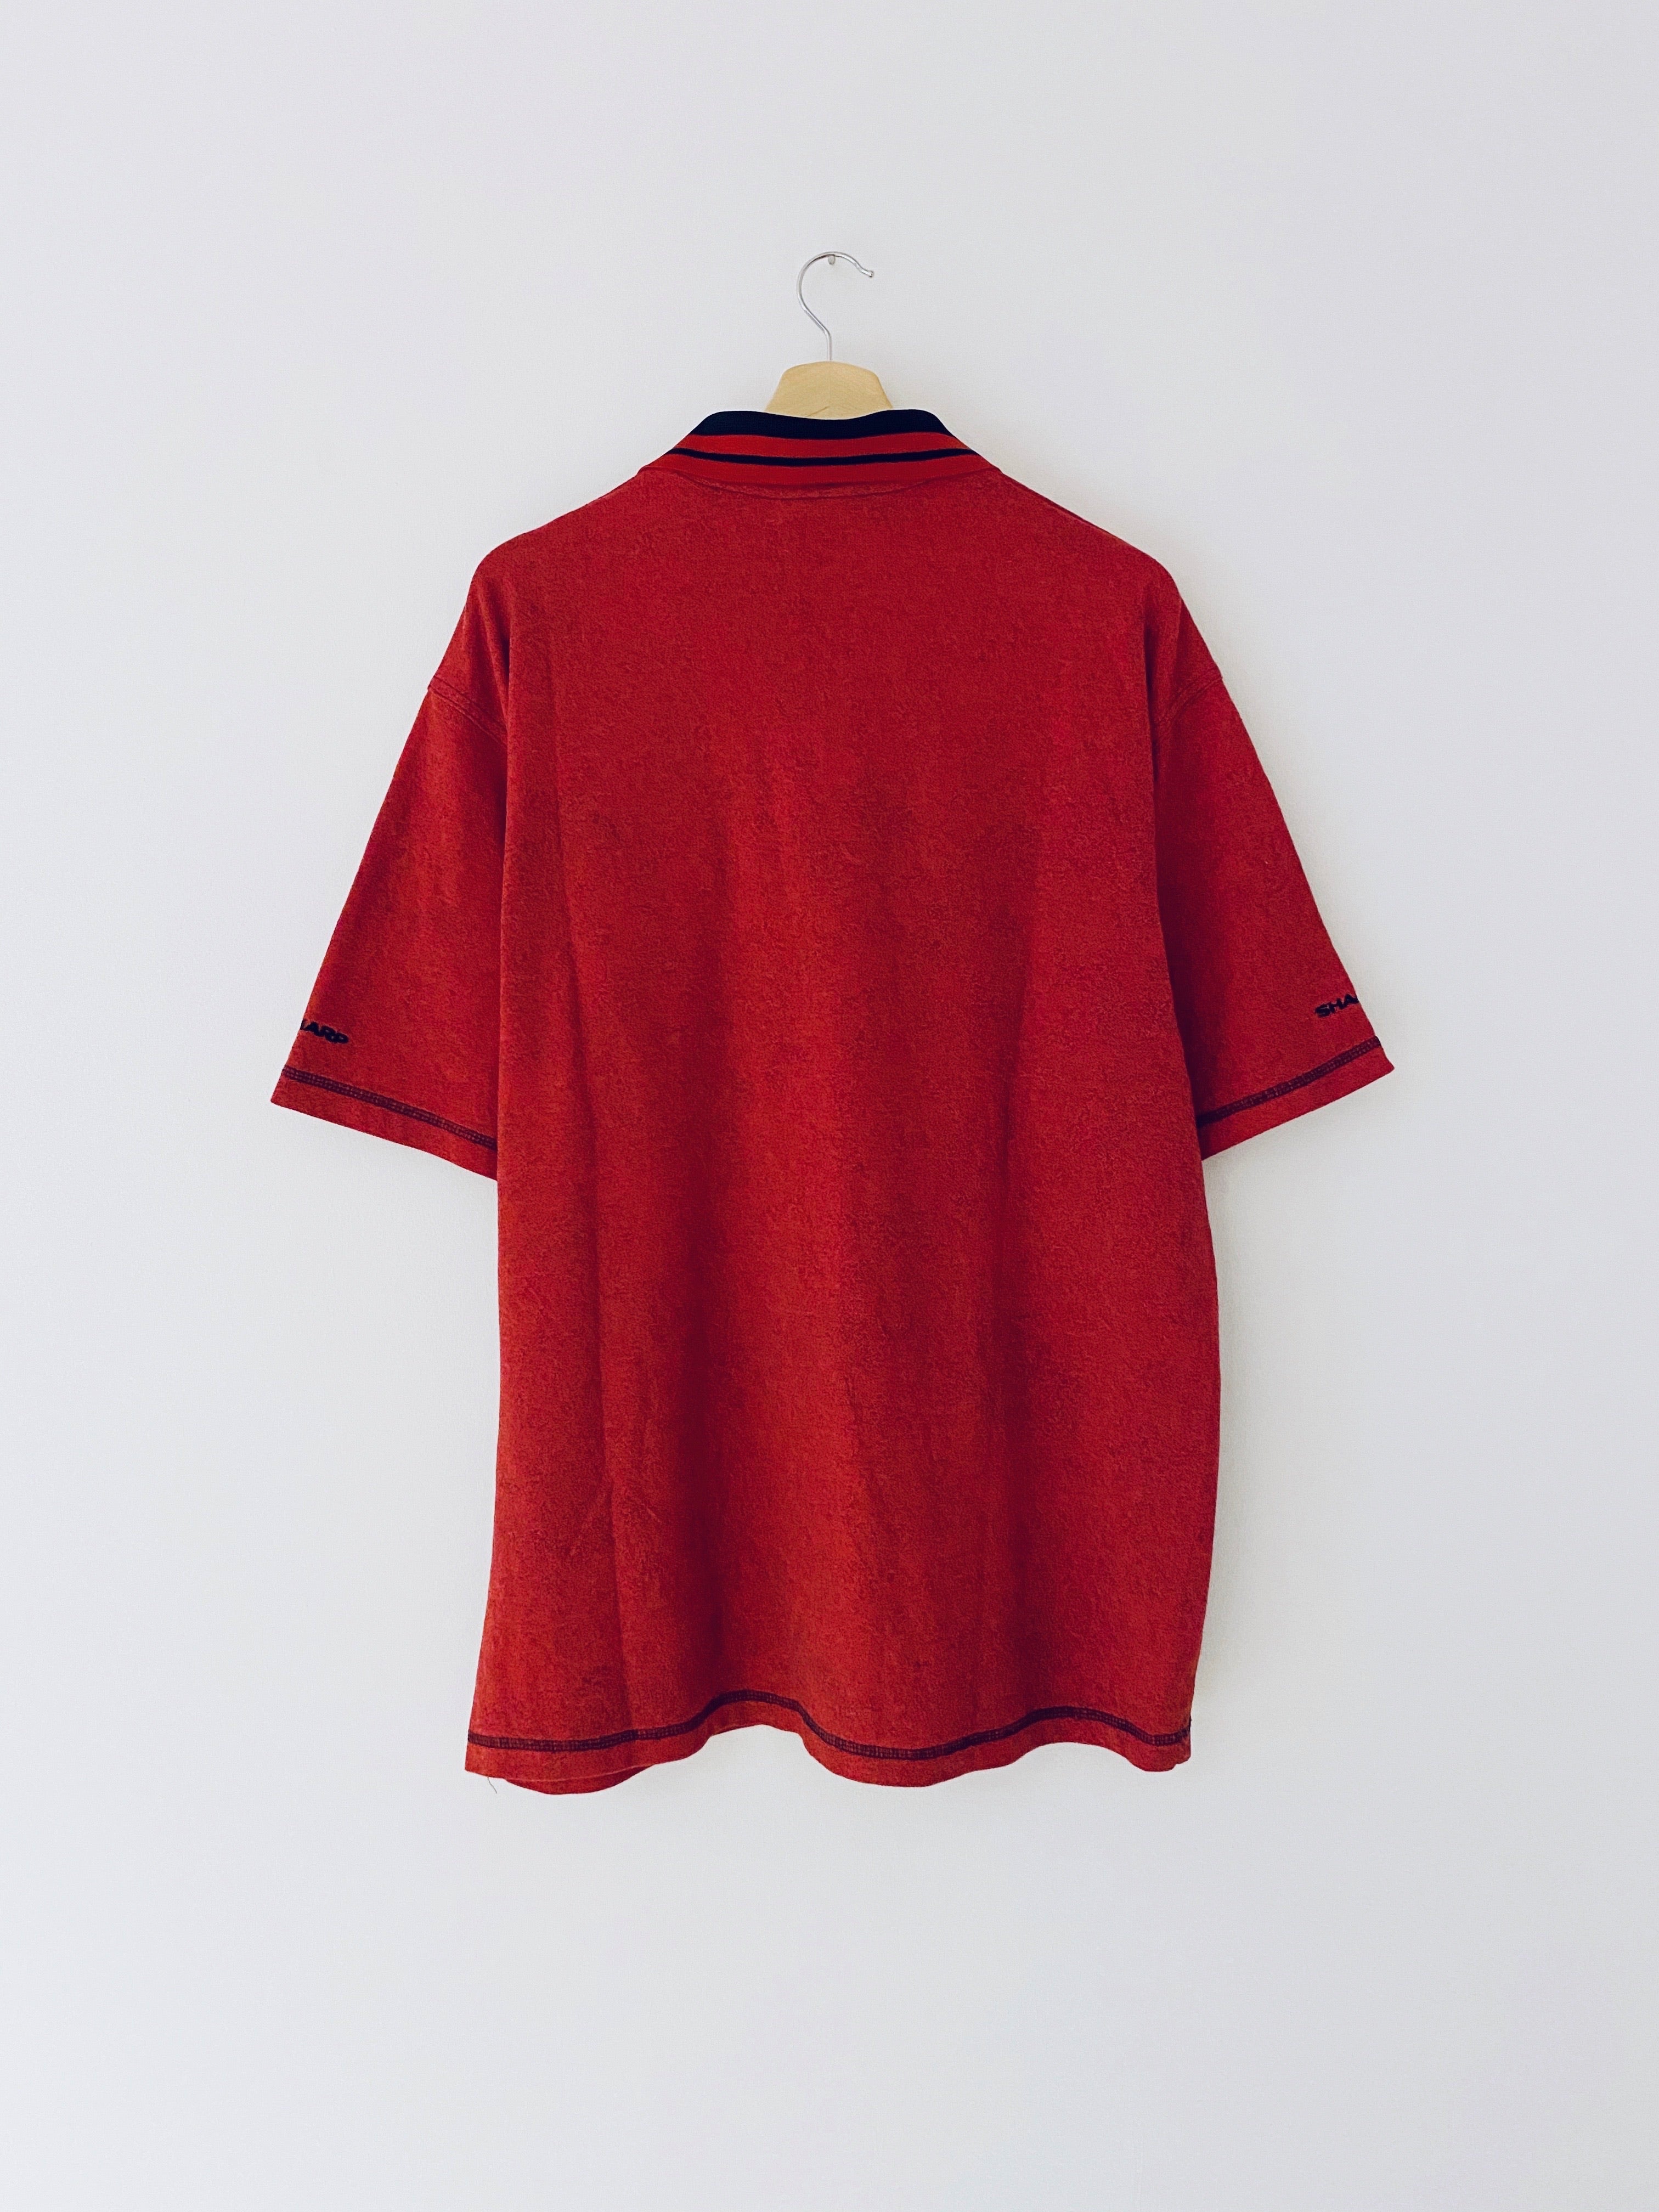 1998/99 Manchester United Polo Shirt (XL) 9.5/10